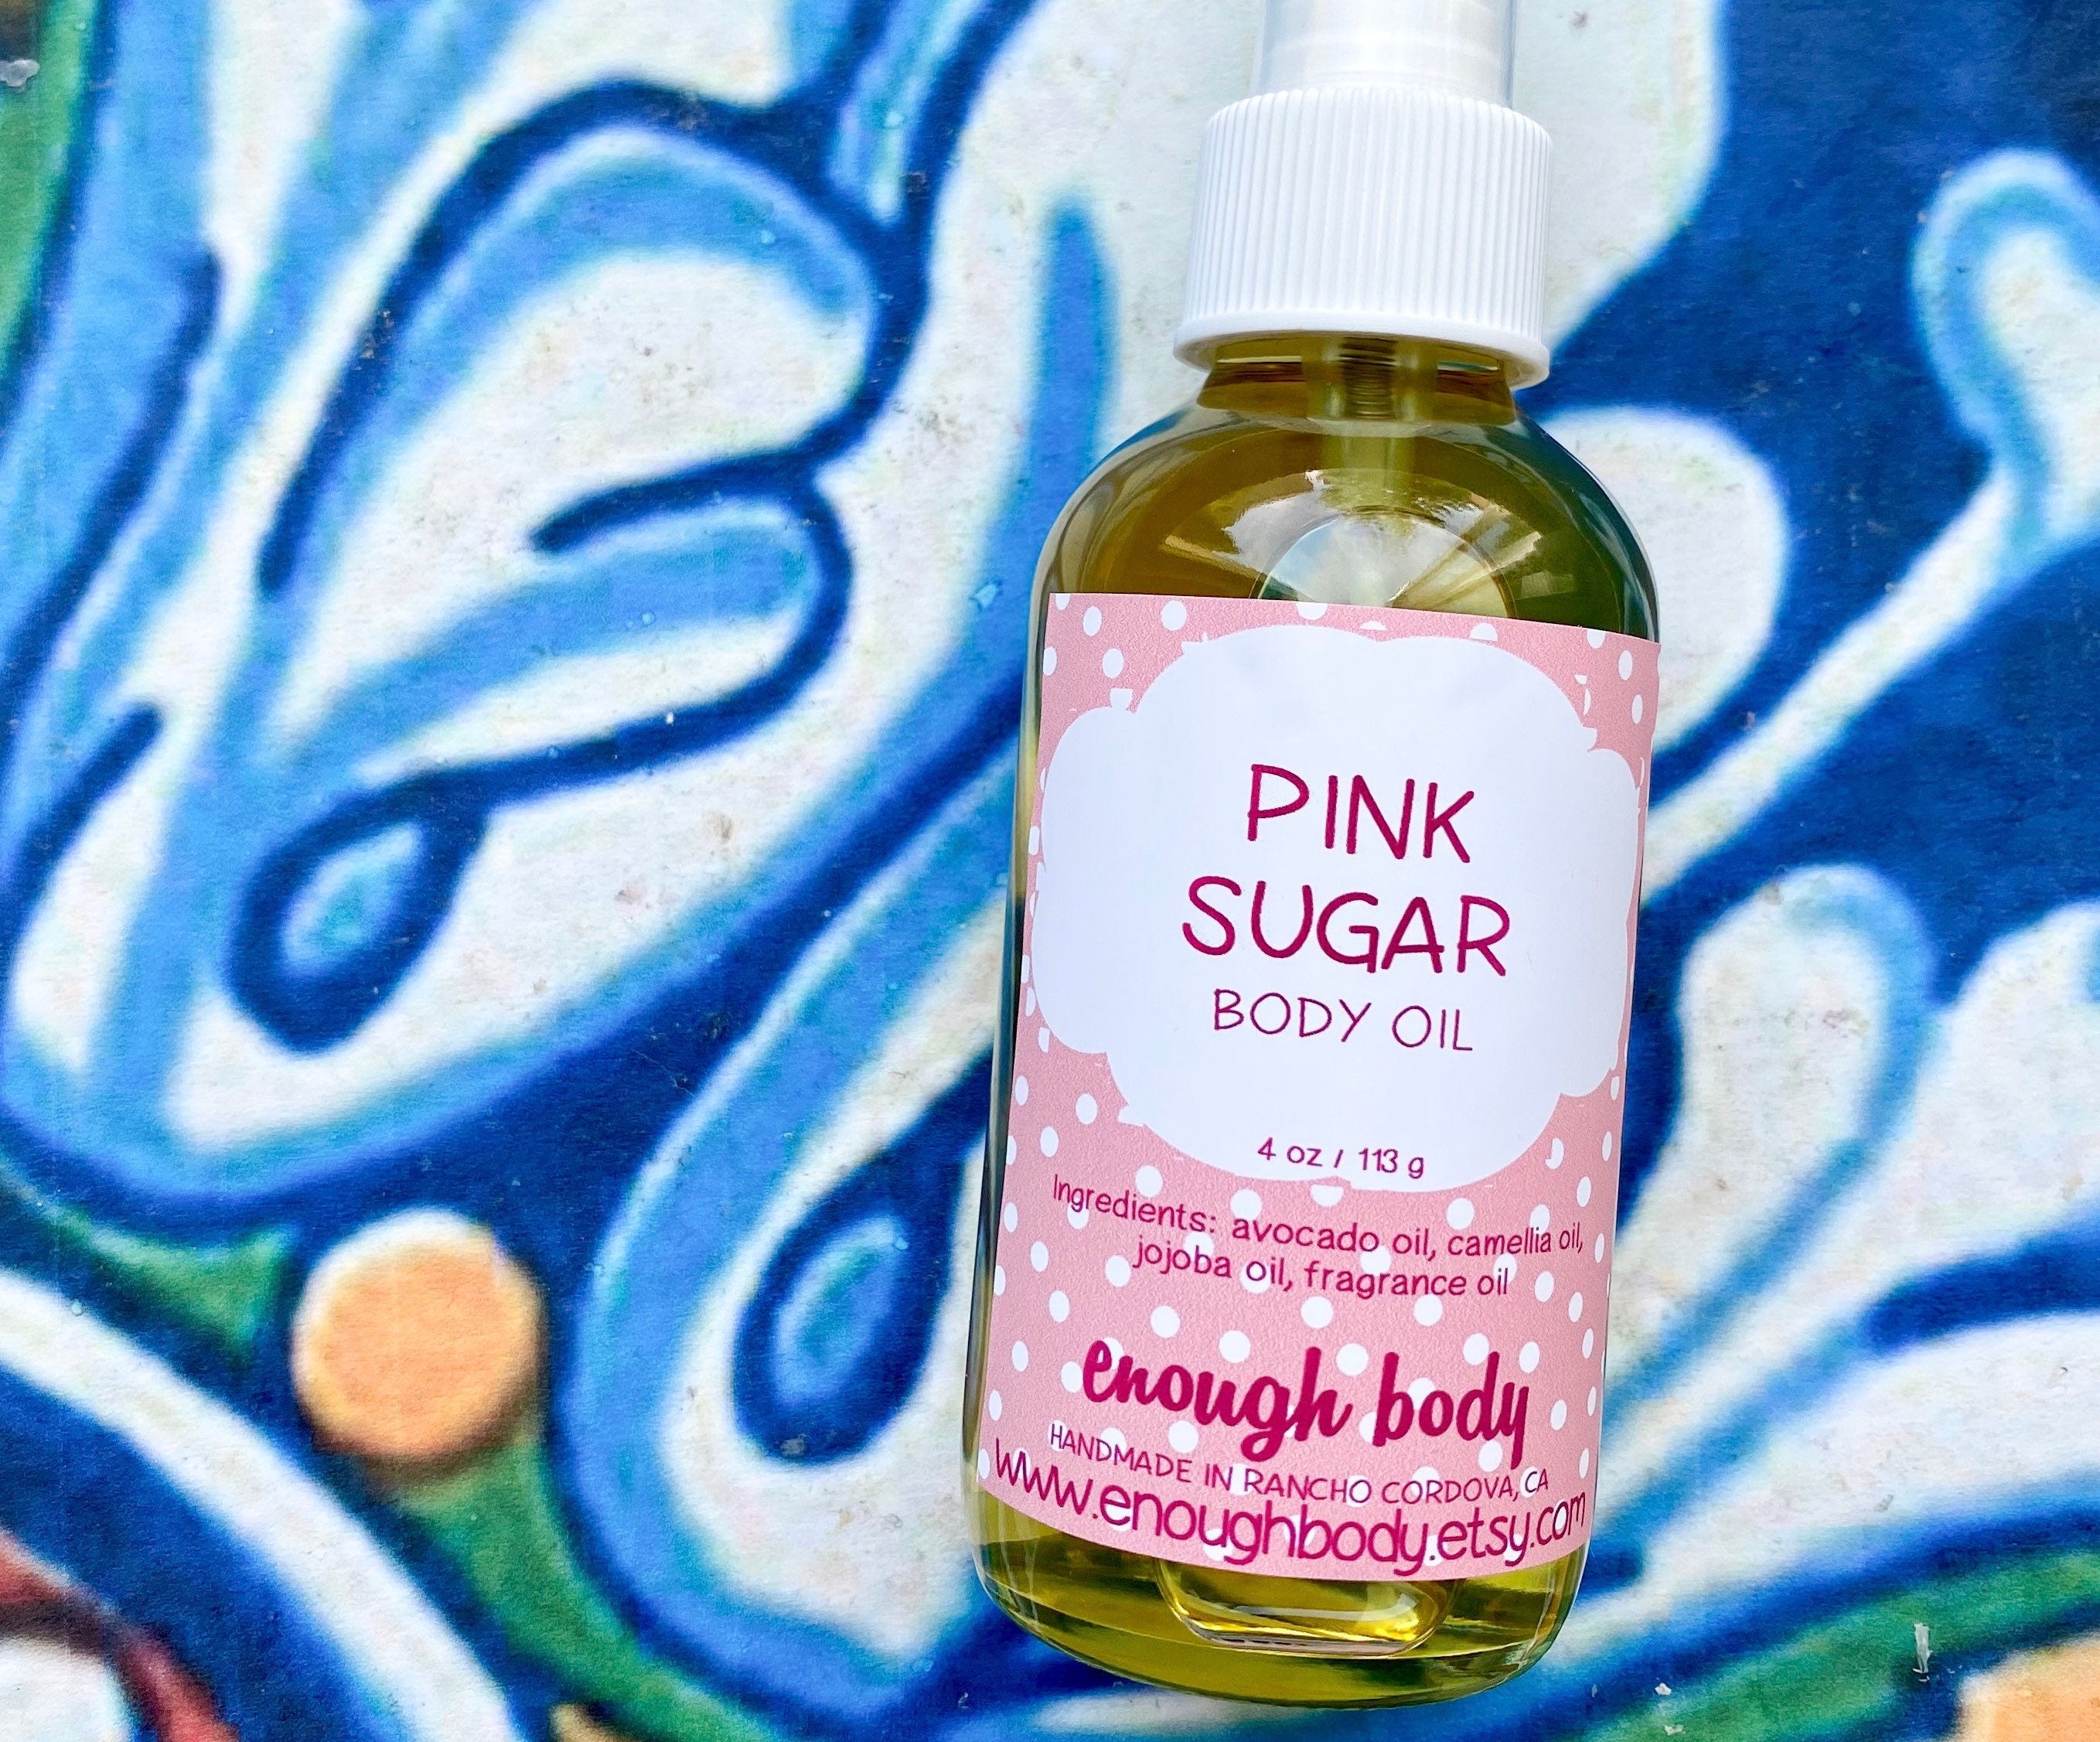 Pink Sugar Premium Body Oil, Natural Body Mist or Souffle Body